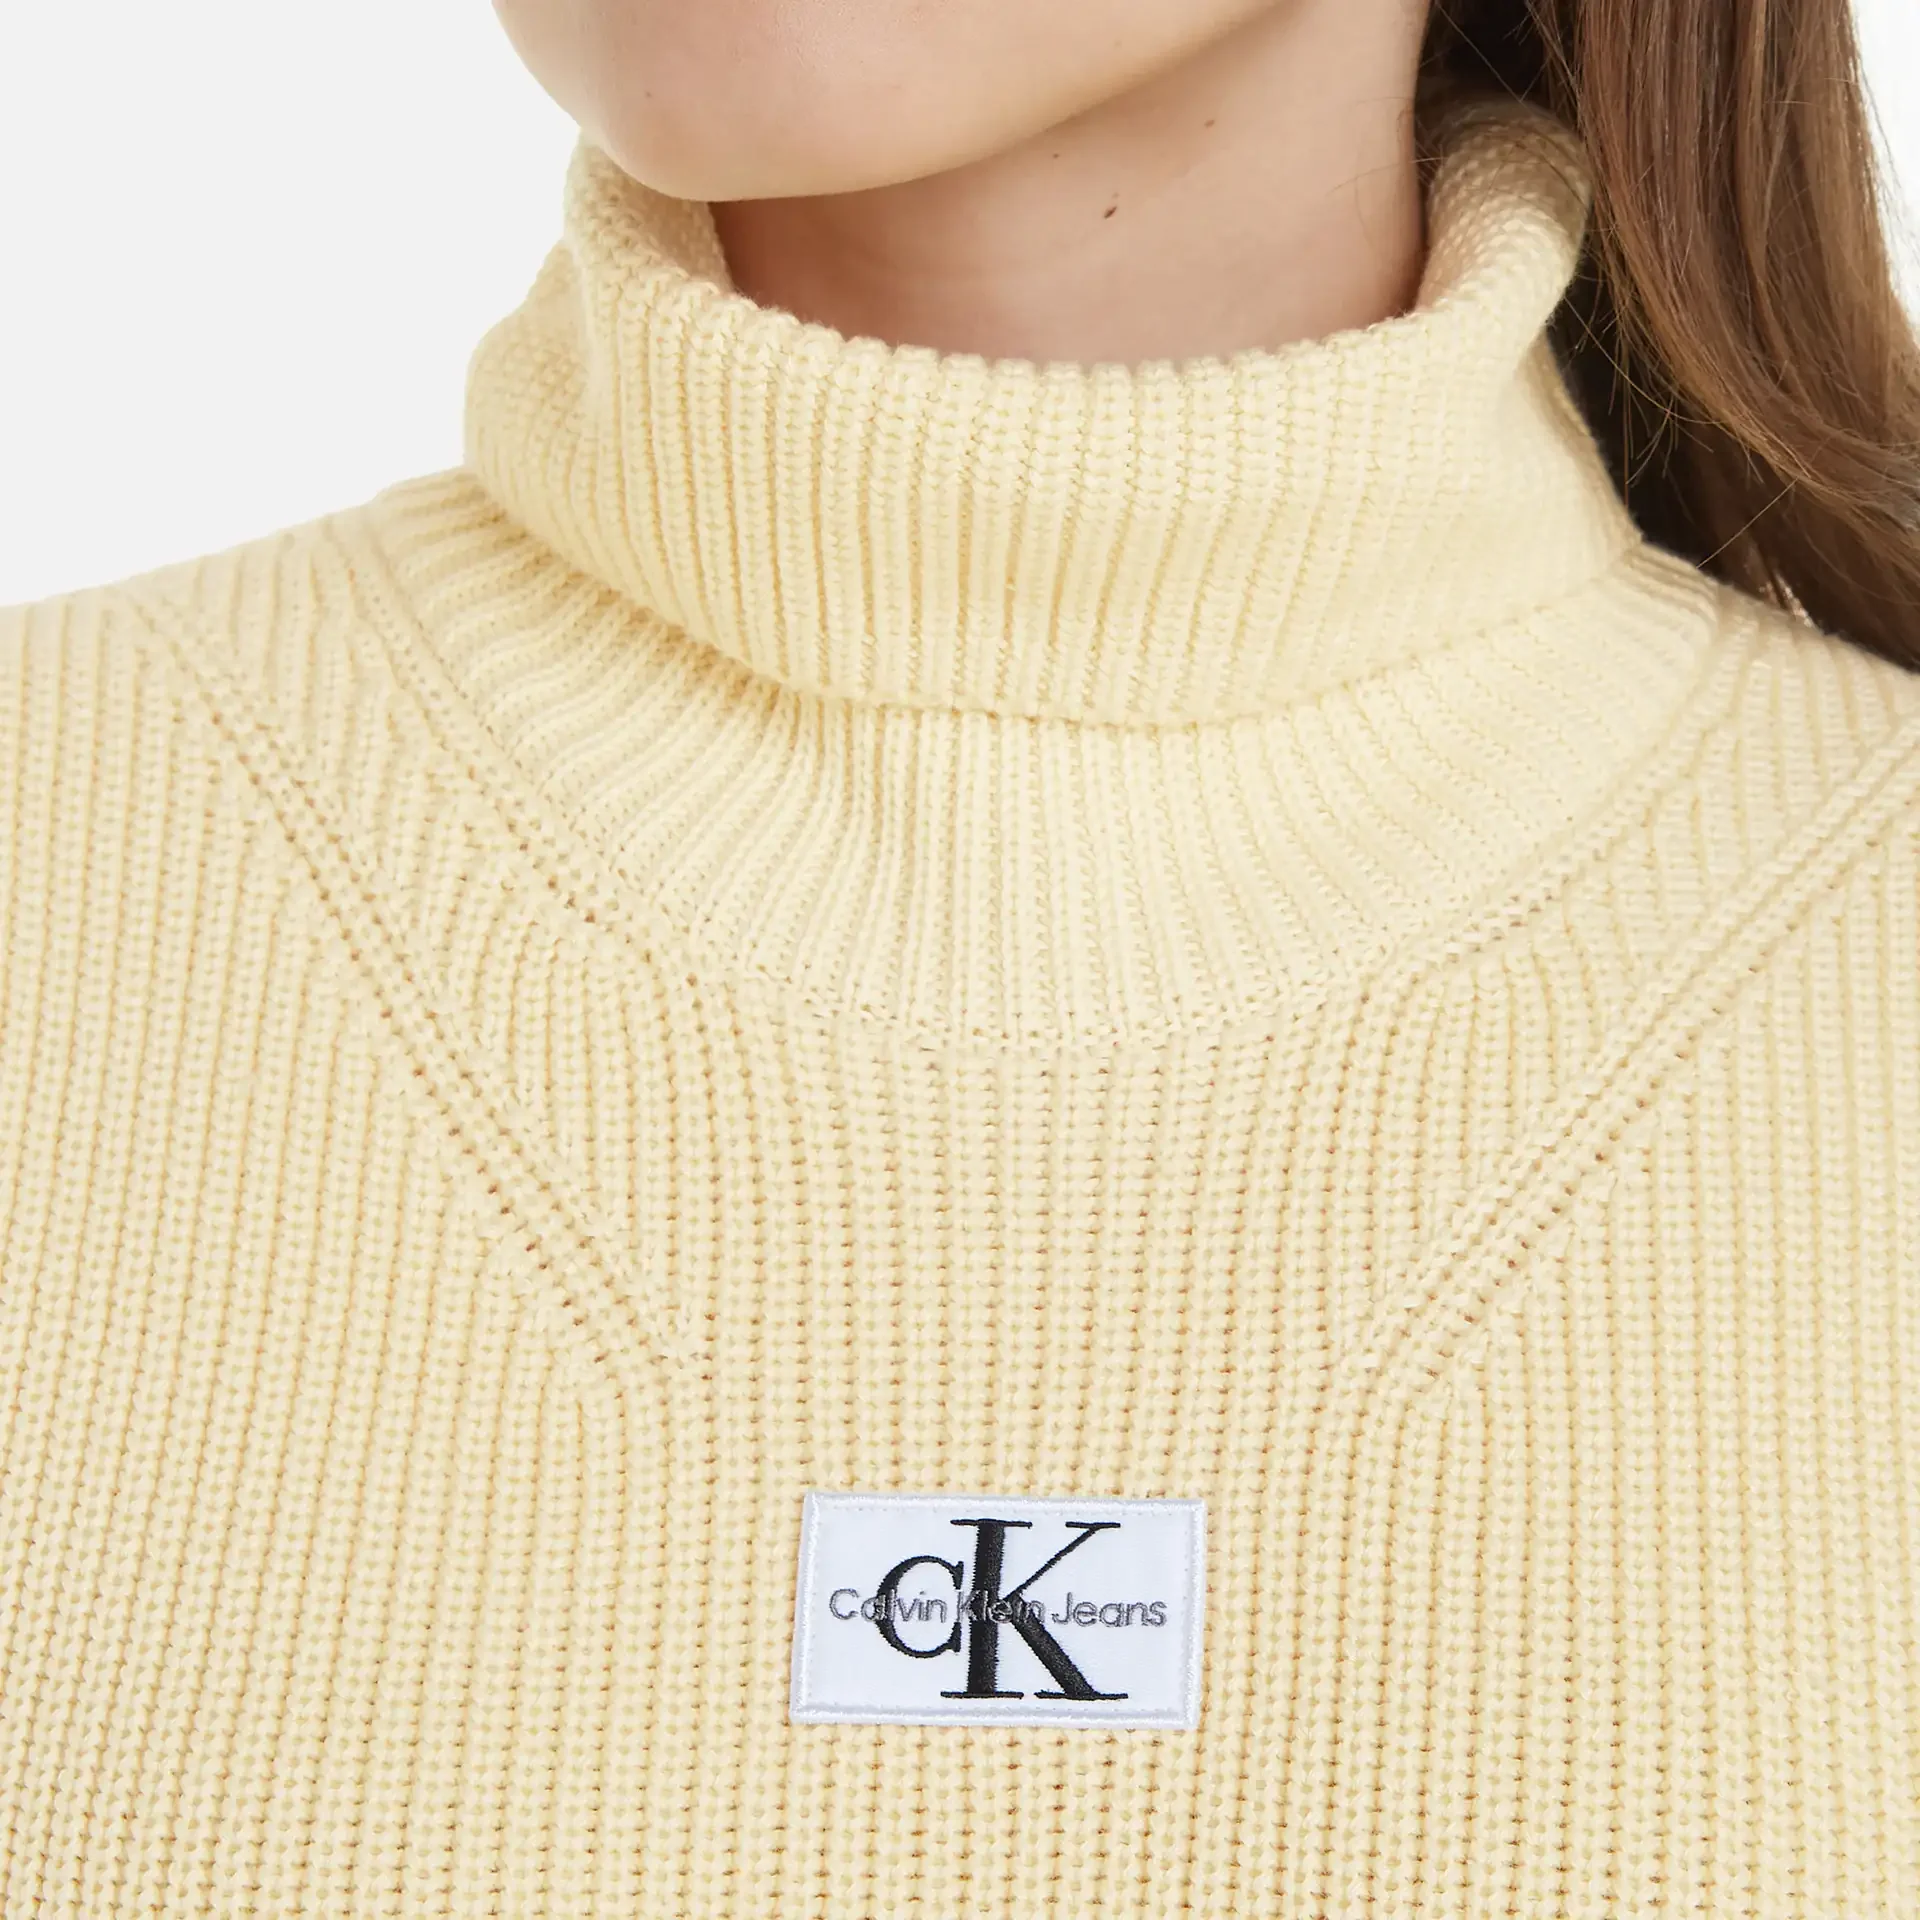 Calvin Klein Jeans Woven Label Sweater Vest Yellow